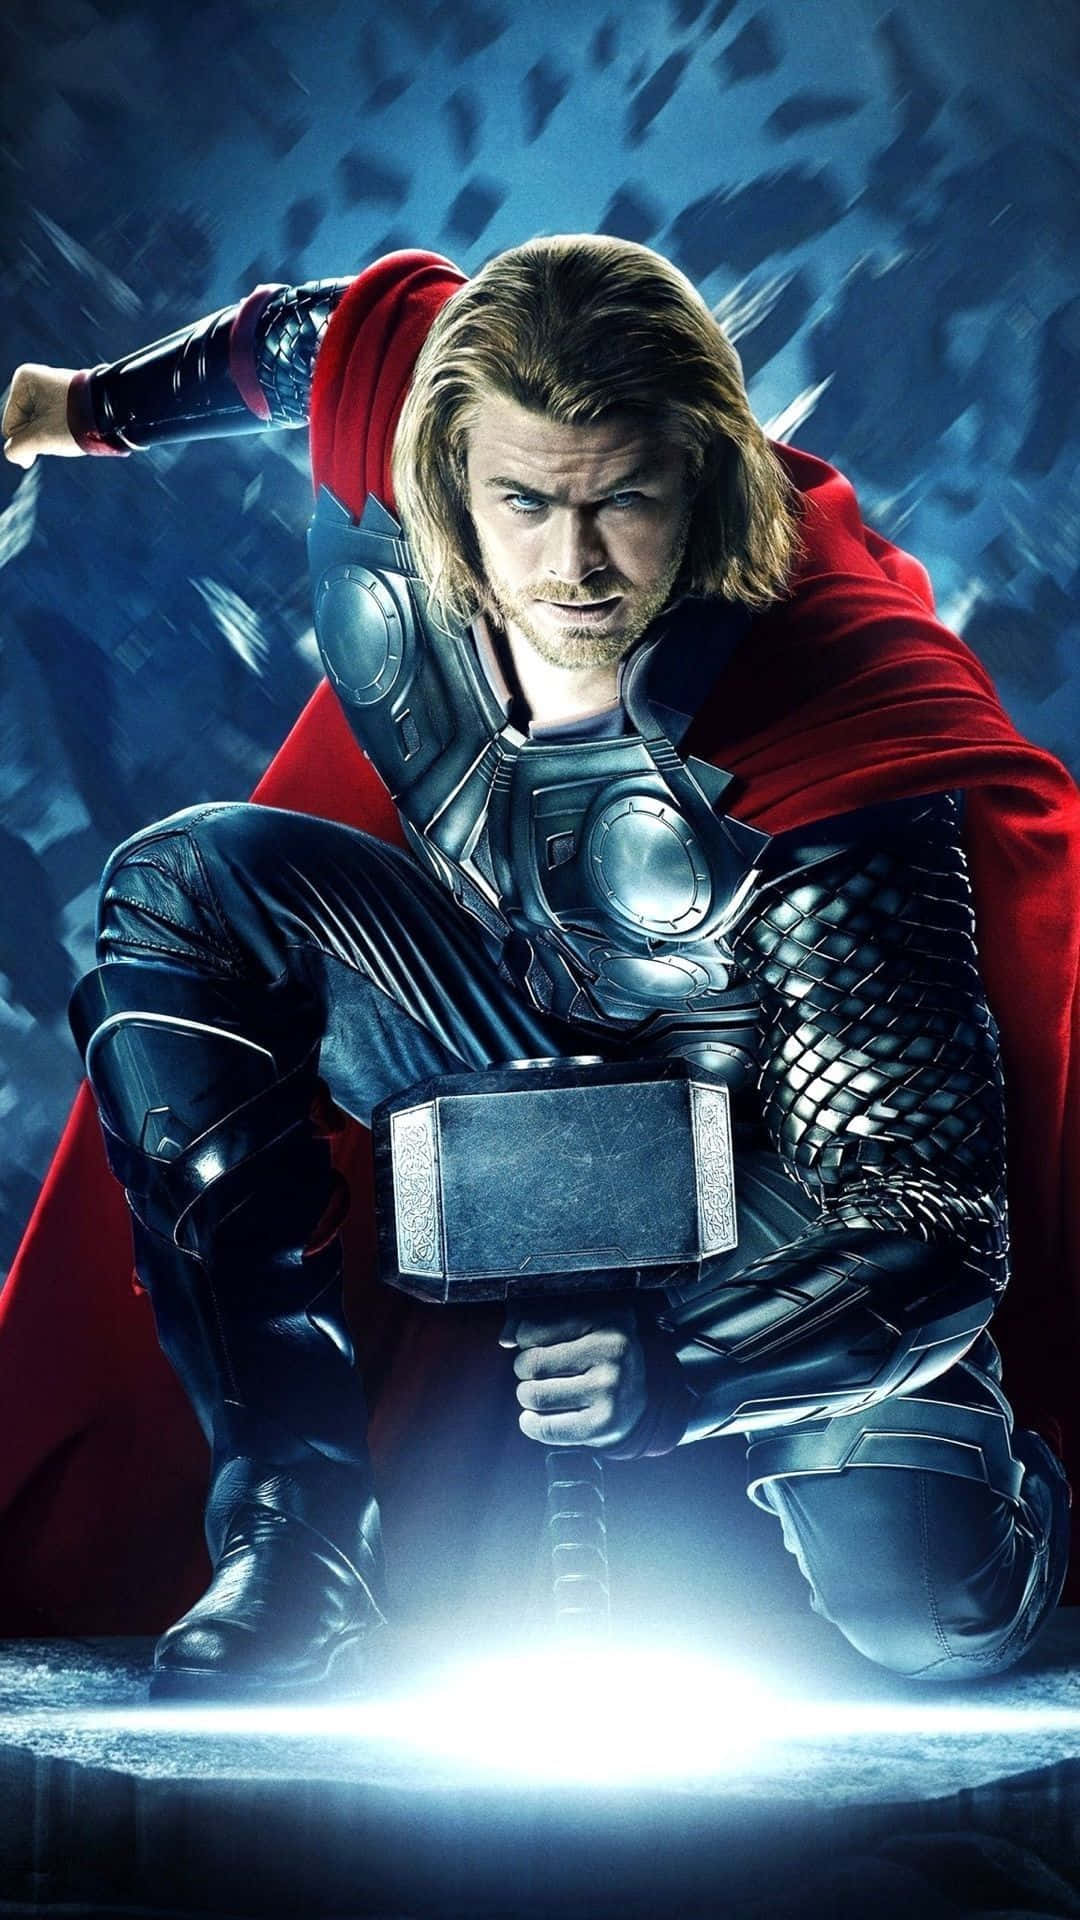 Unleash the powerful Thor!